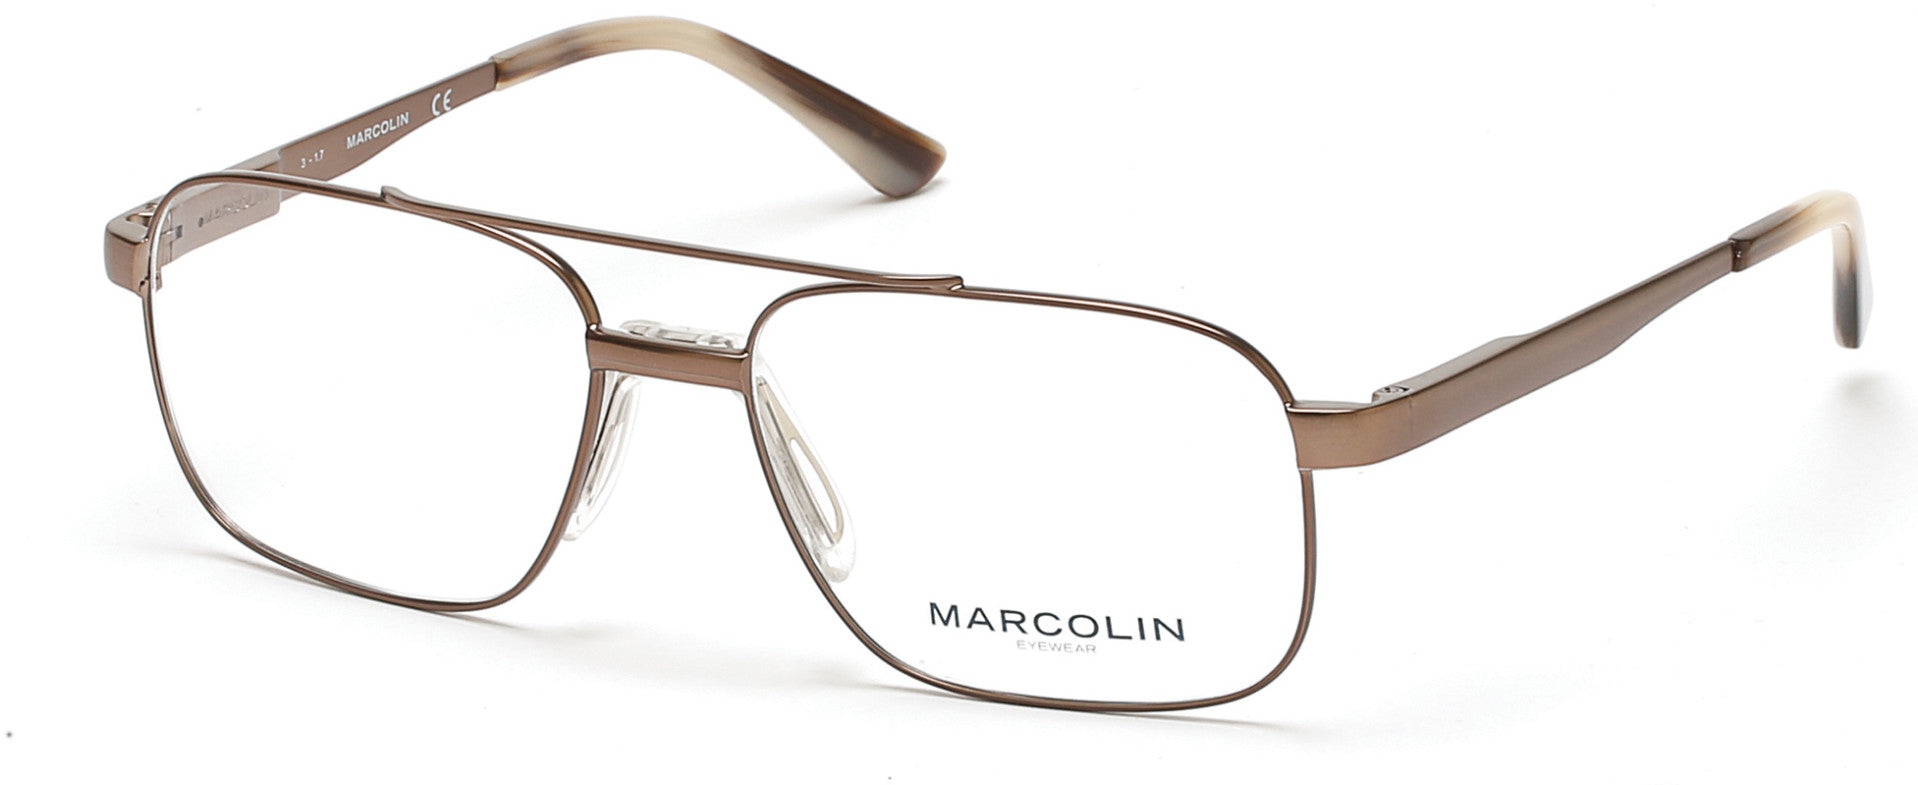 Marcolin MA3005 Eyeglasses 049-049 - Matte Dark Brown